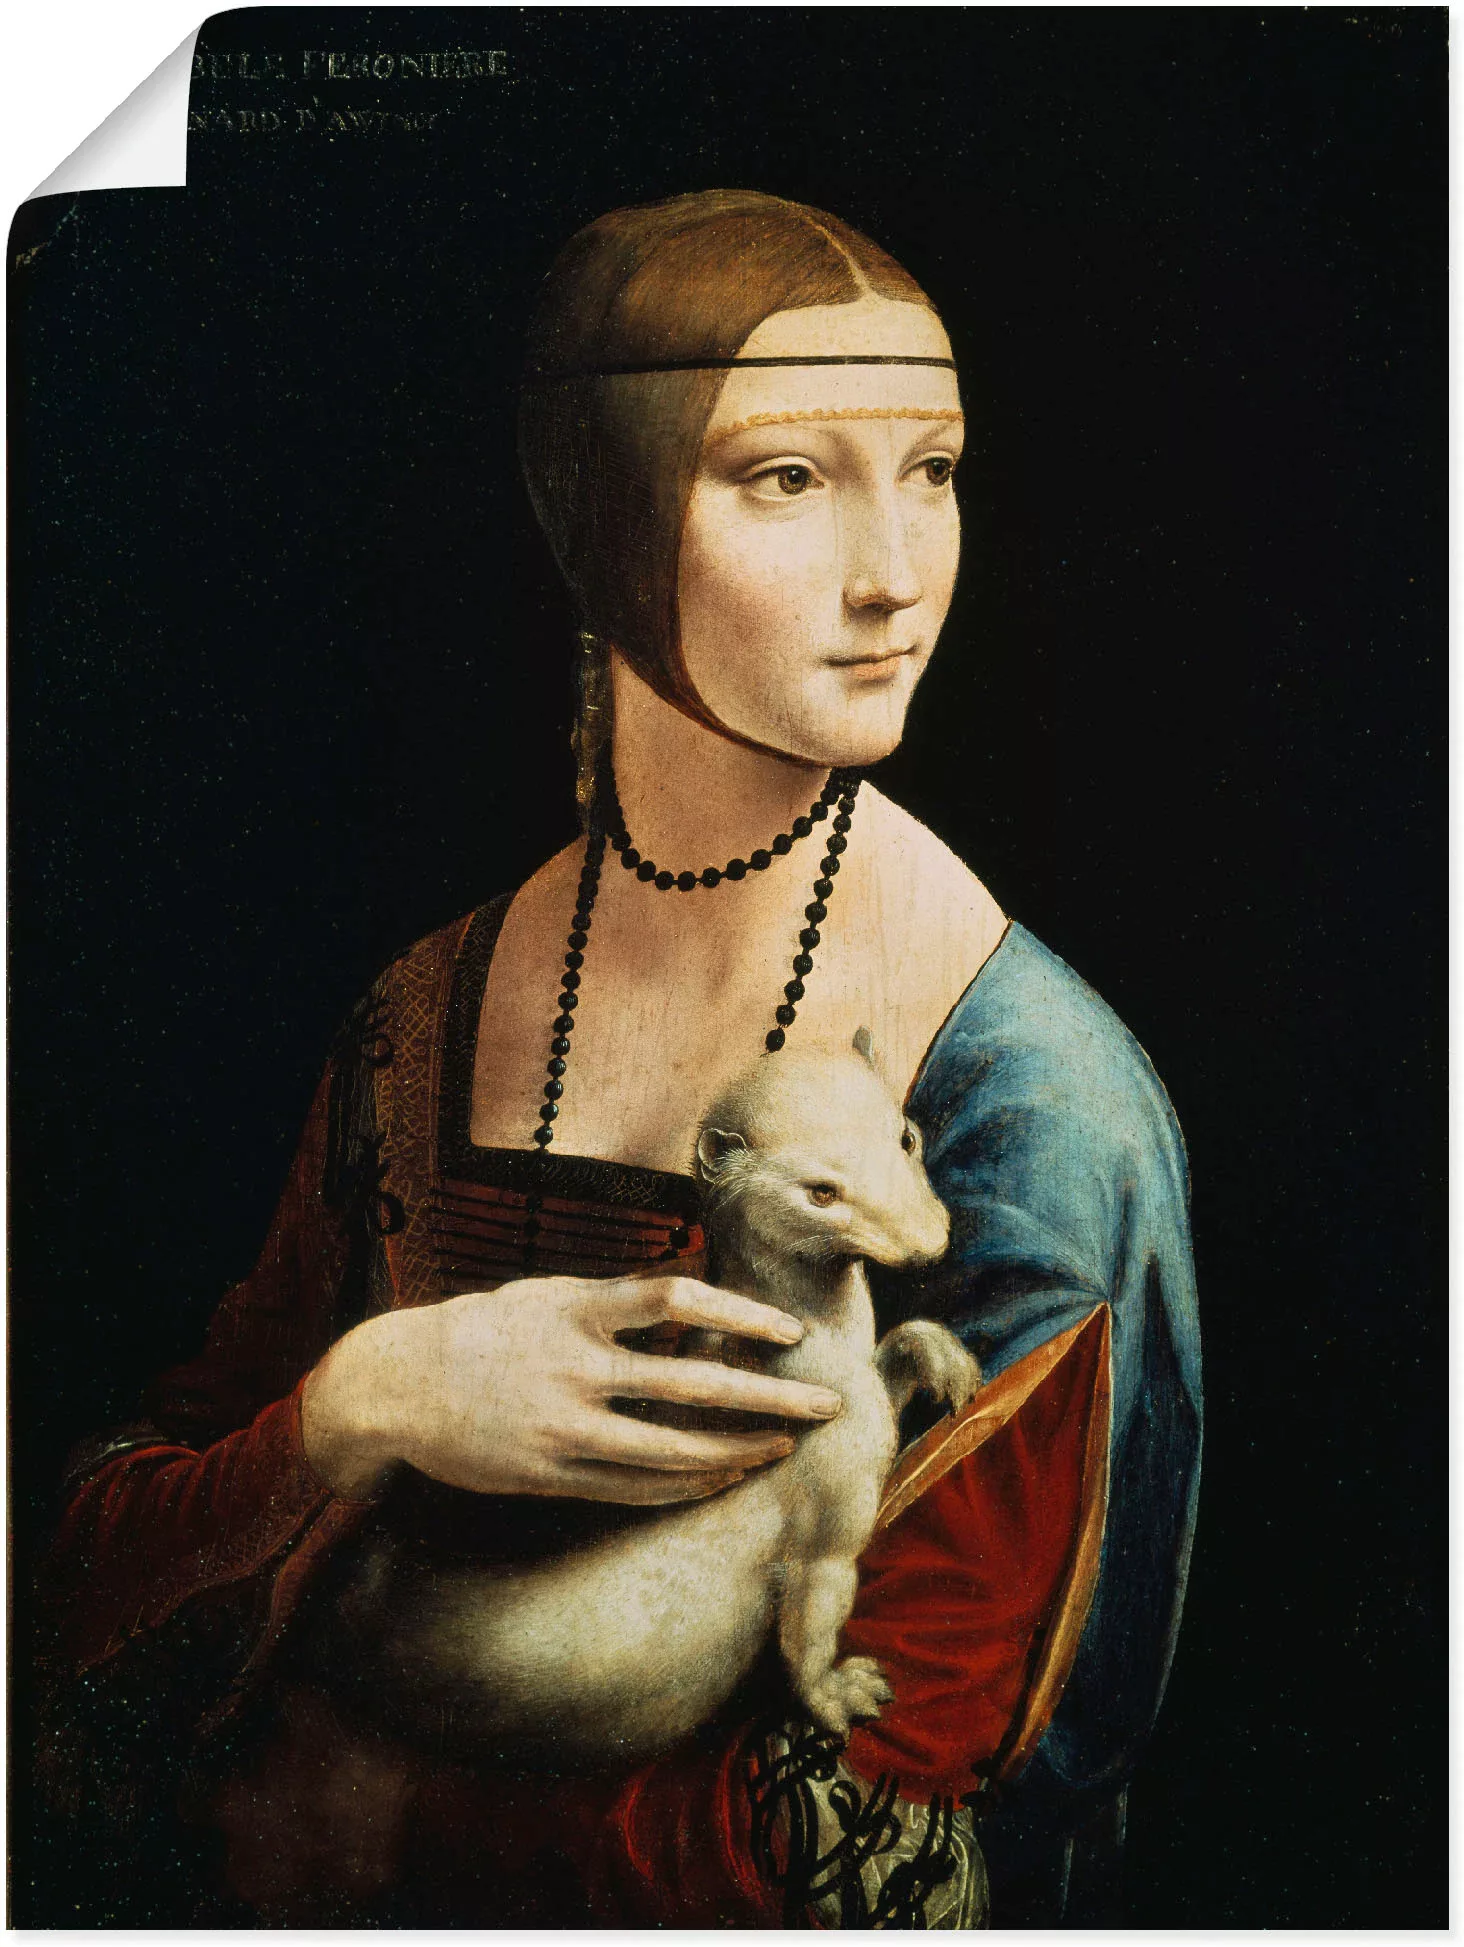 Artland Wandbild »Dame mit dem Hermelin Porträt«, Frau, (1 St.), als Leinwa günstig online kaufen